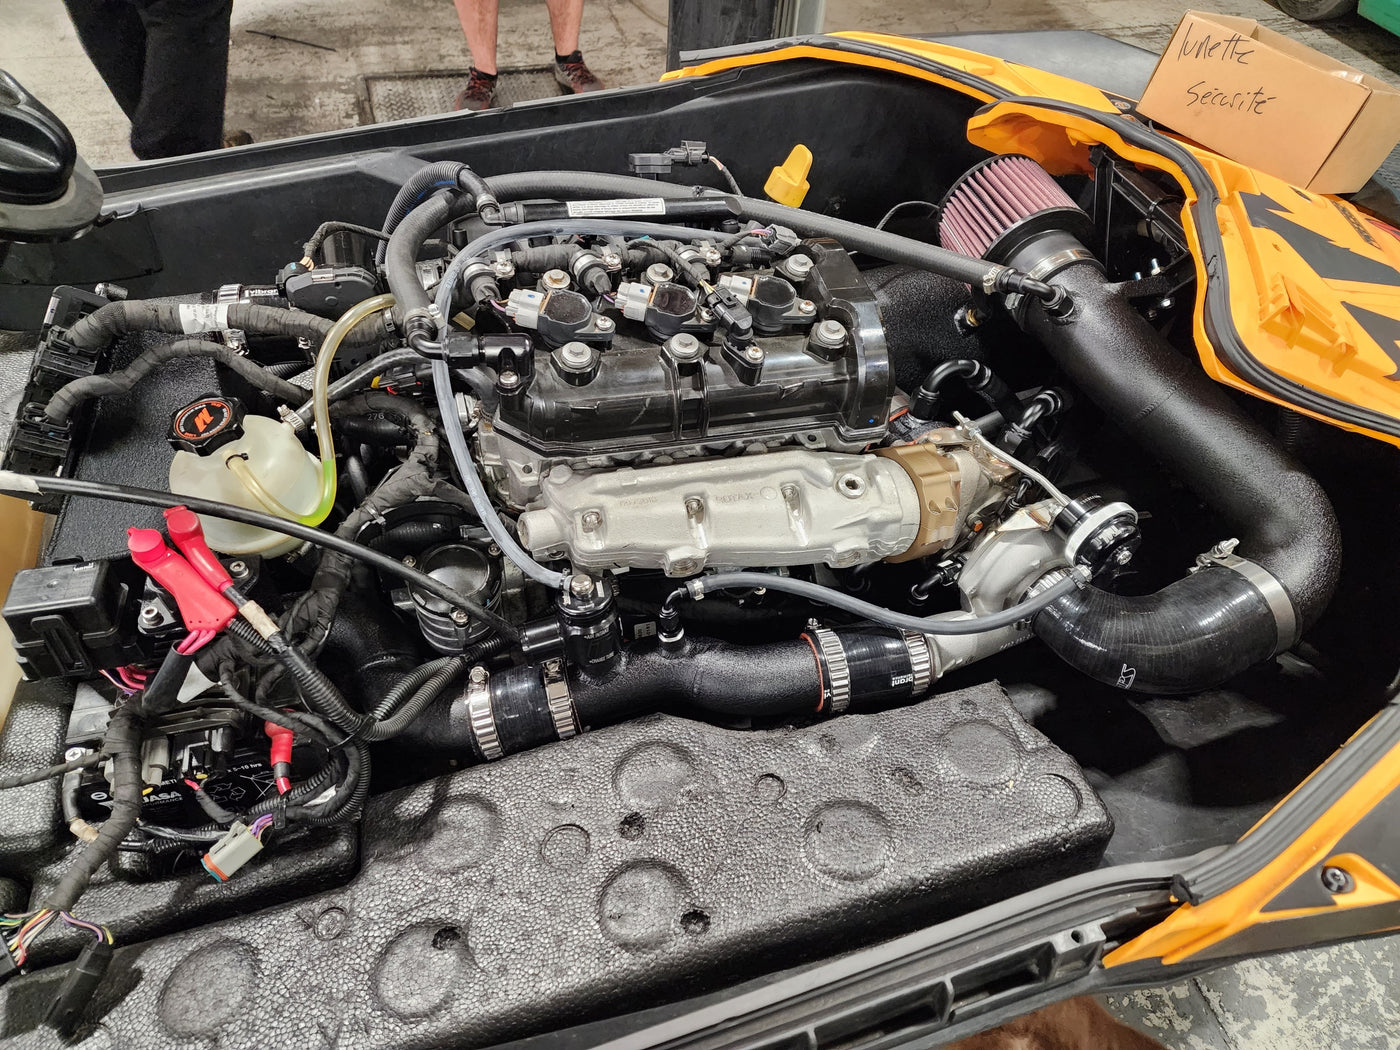 Kit Spark Turbo 165HP - 900 as